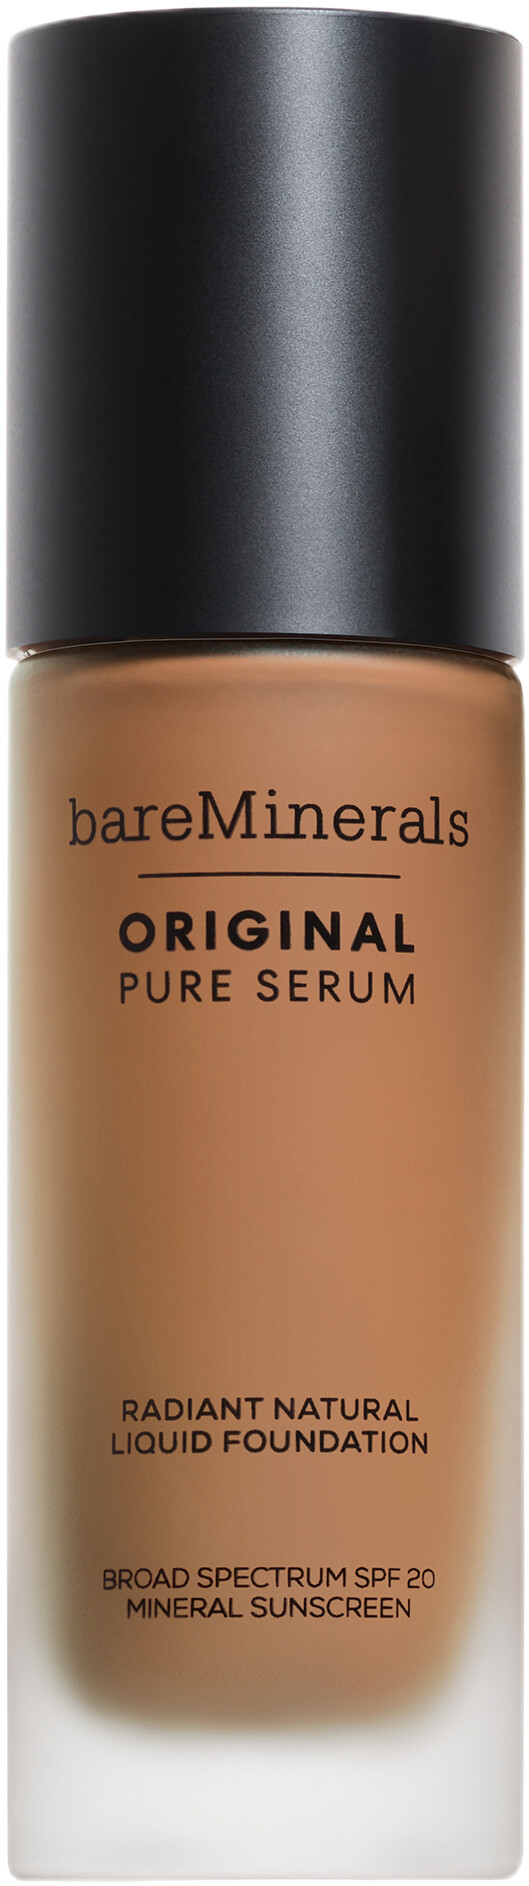 bareMinerals Original Pure Serum Radiant Natural Liquid Foundation SPF20 30ml 4.5 - Medium Deep Neut